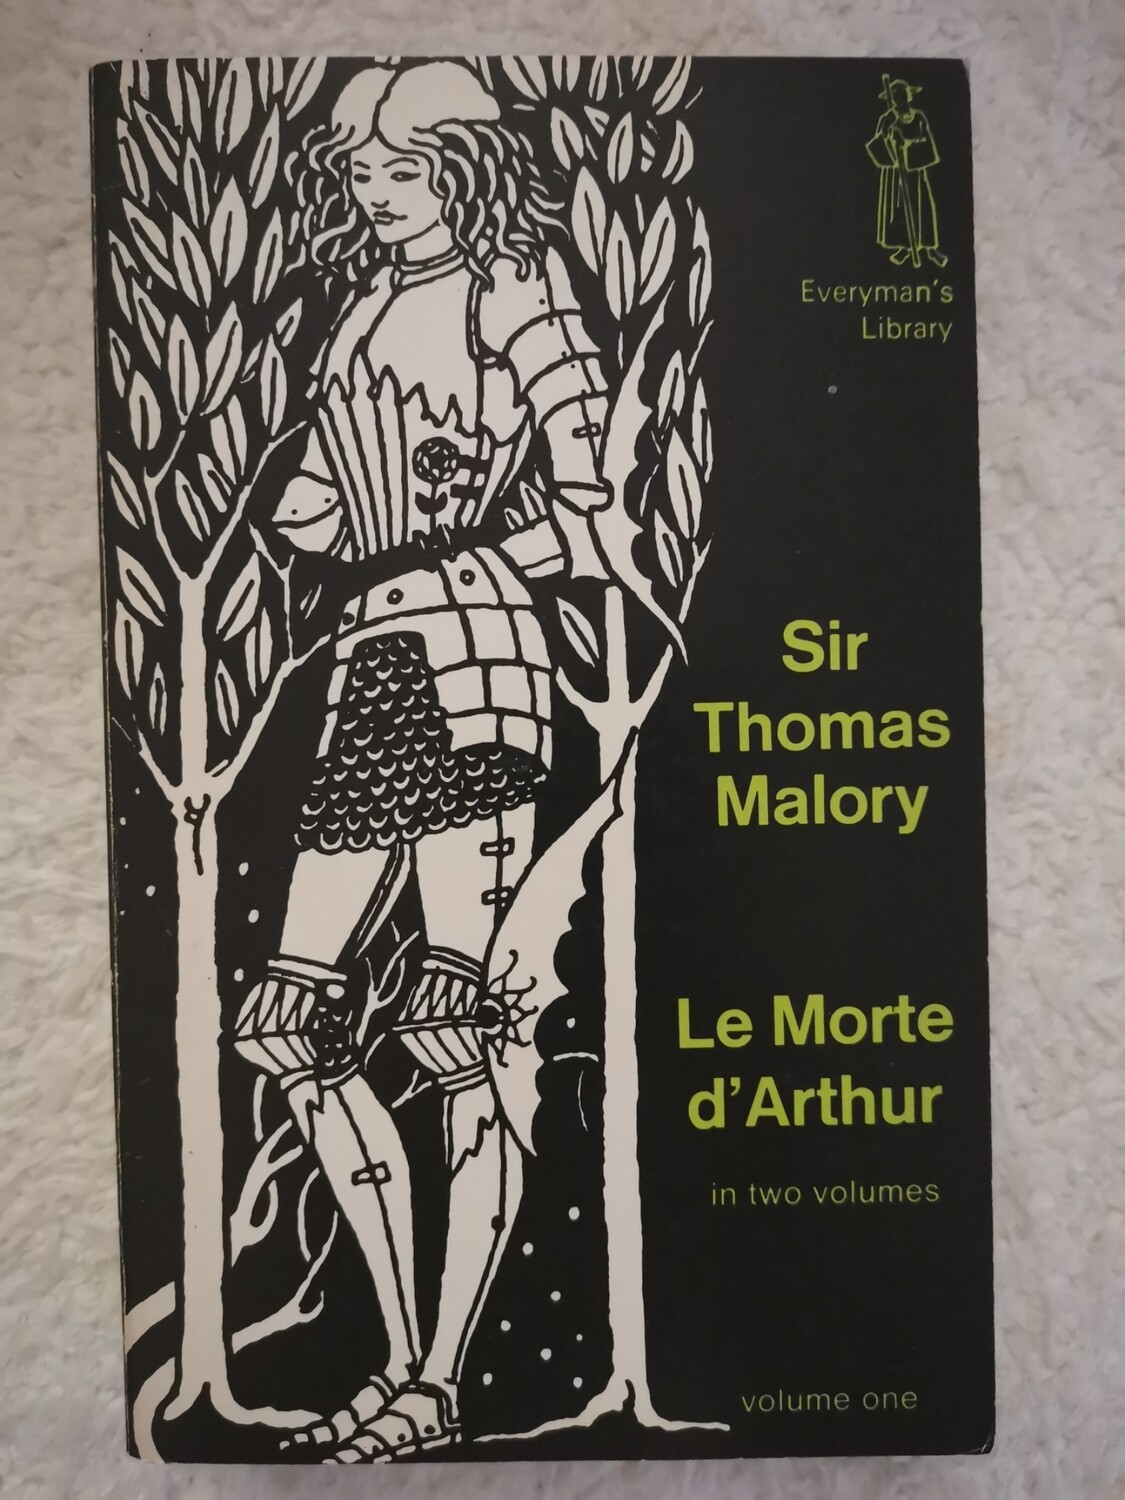 Le Morte d'Arthur, Sir Thomas Malory